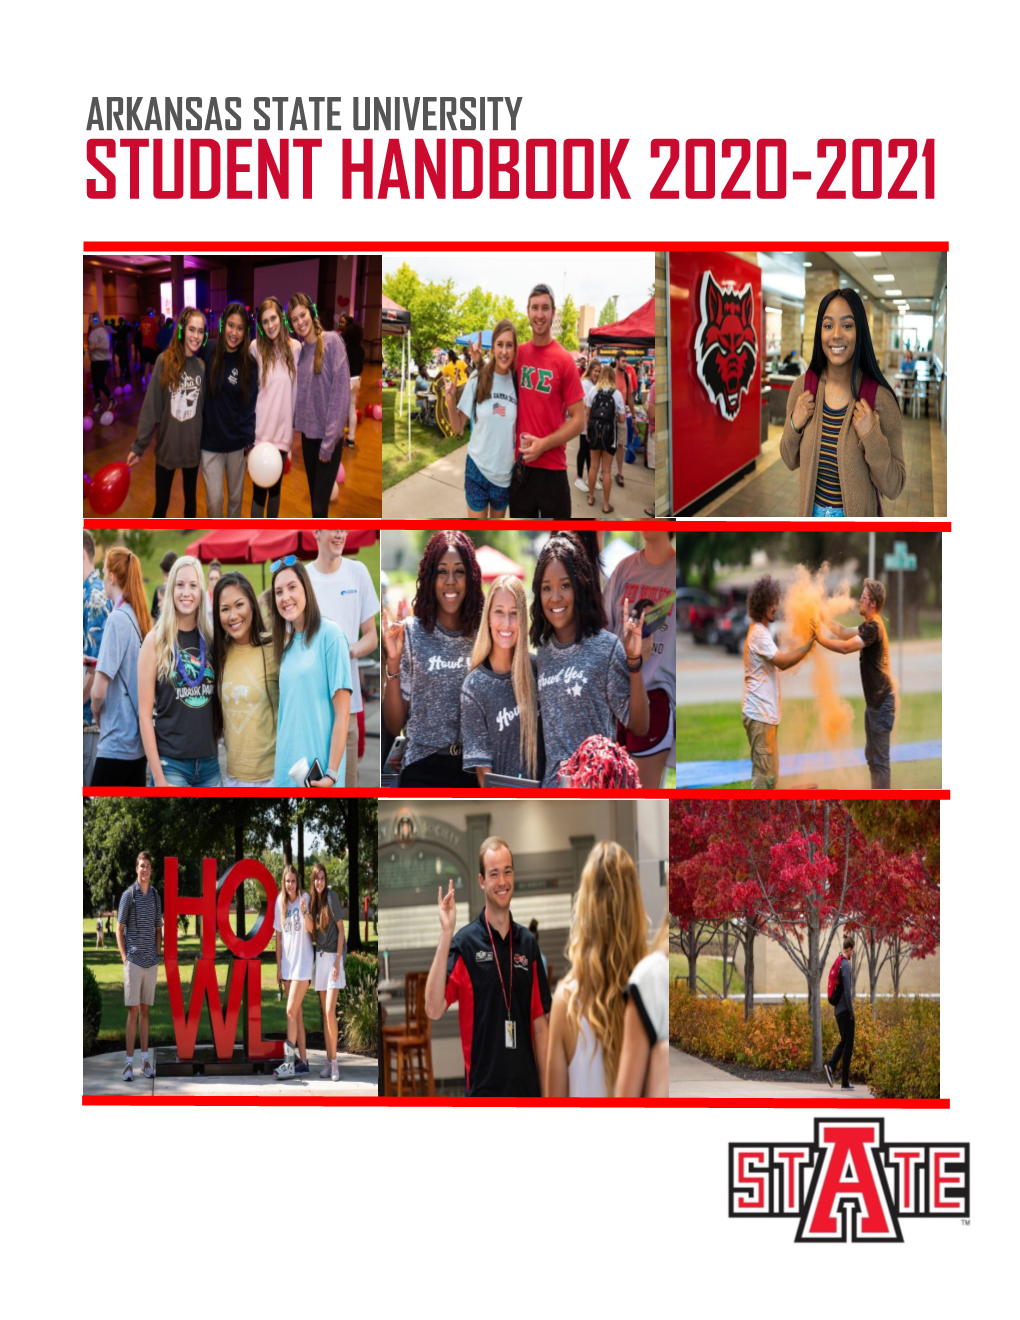 Arkansas State University Student Handbook 2020-2021